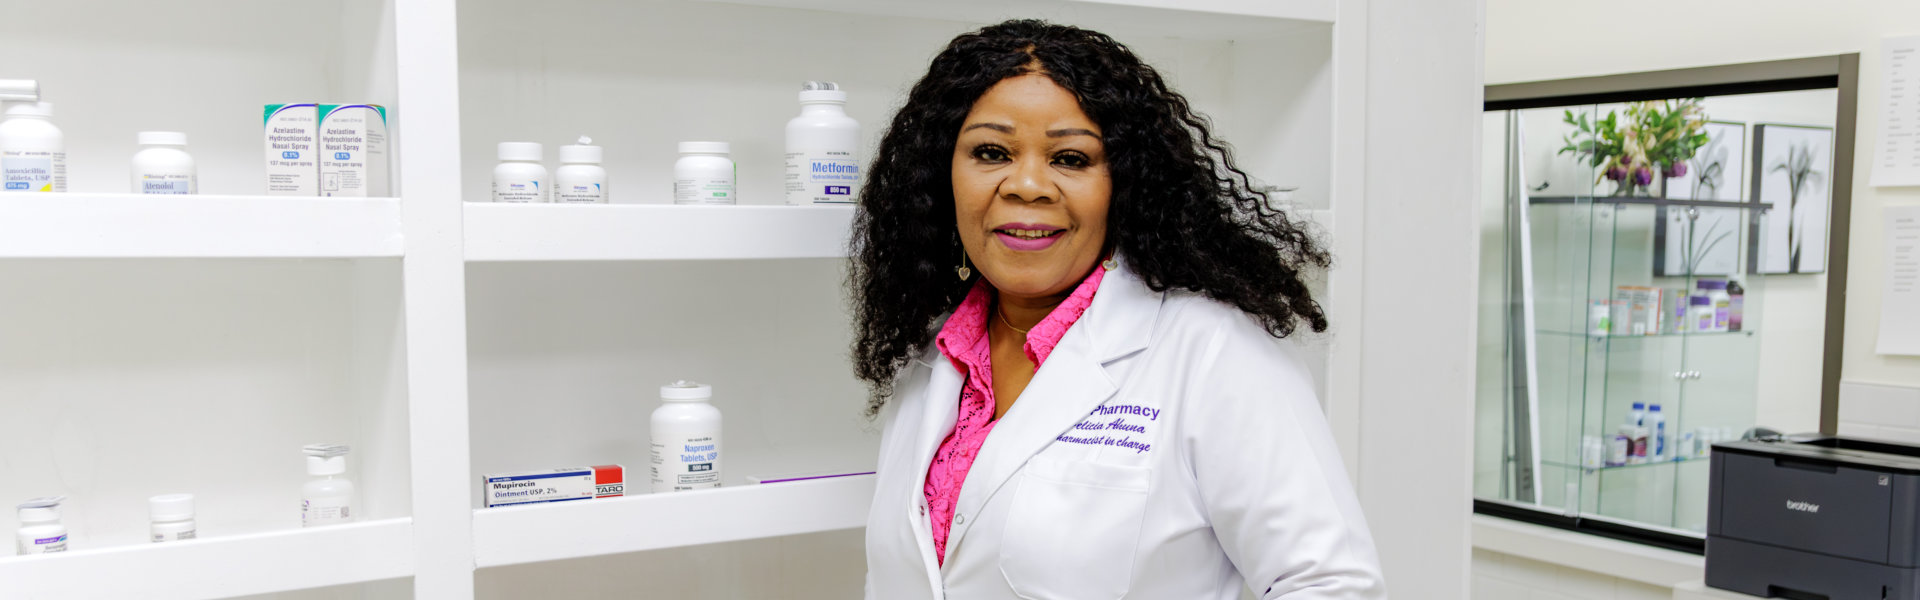 pharmacist smiling in front of a shelf of medicine bottles